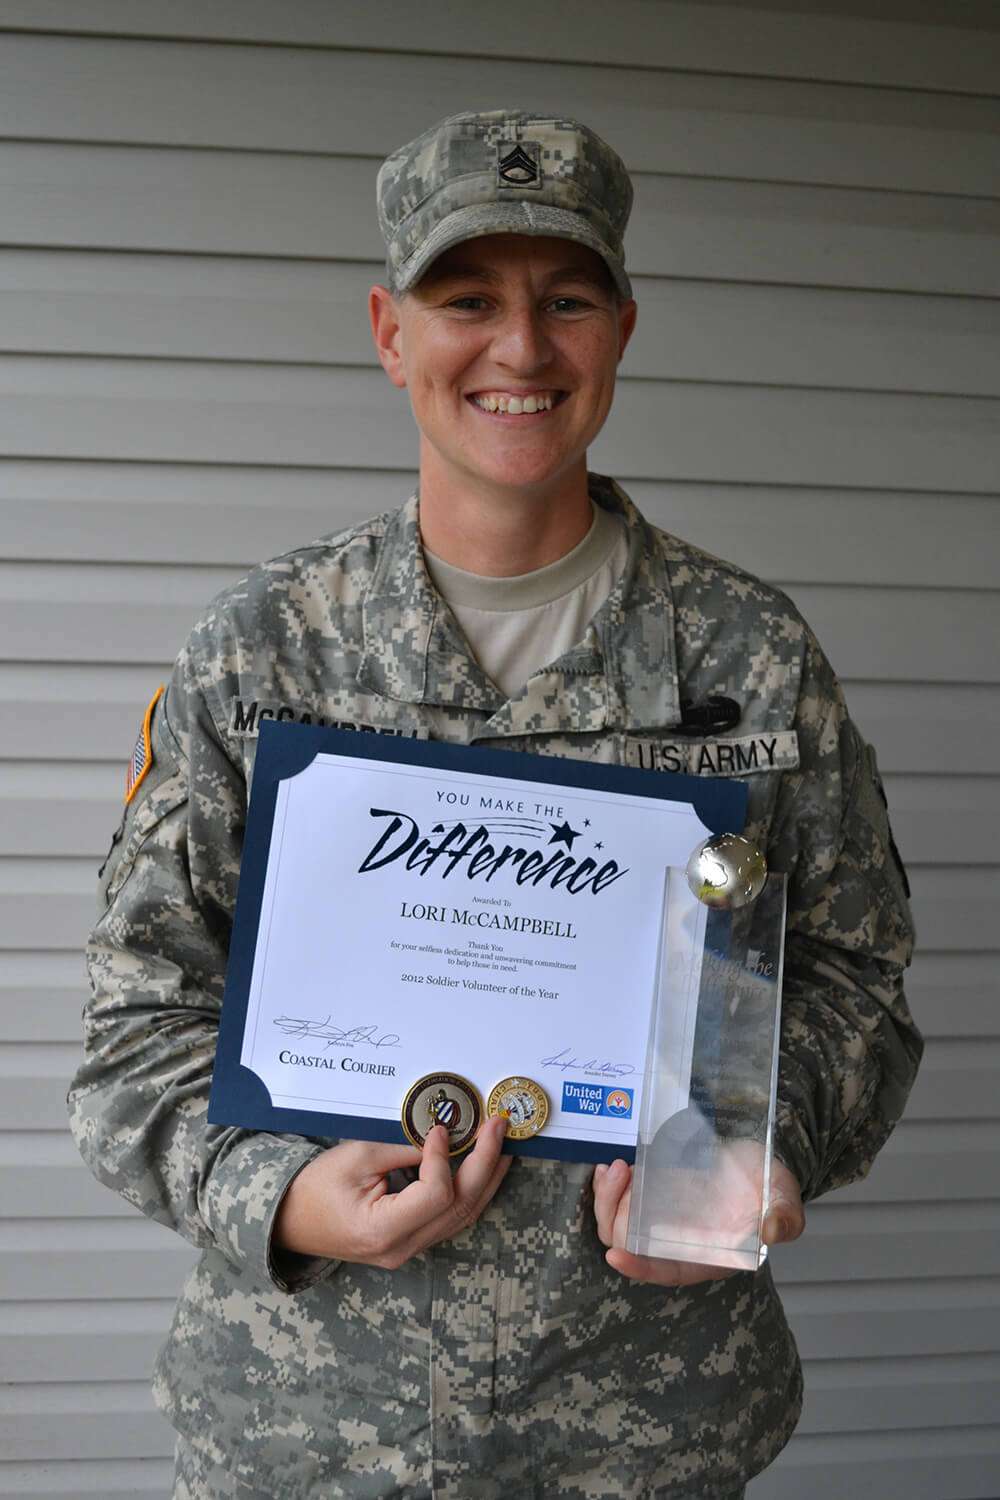 Lori with her Soldier Volunteer Award